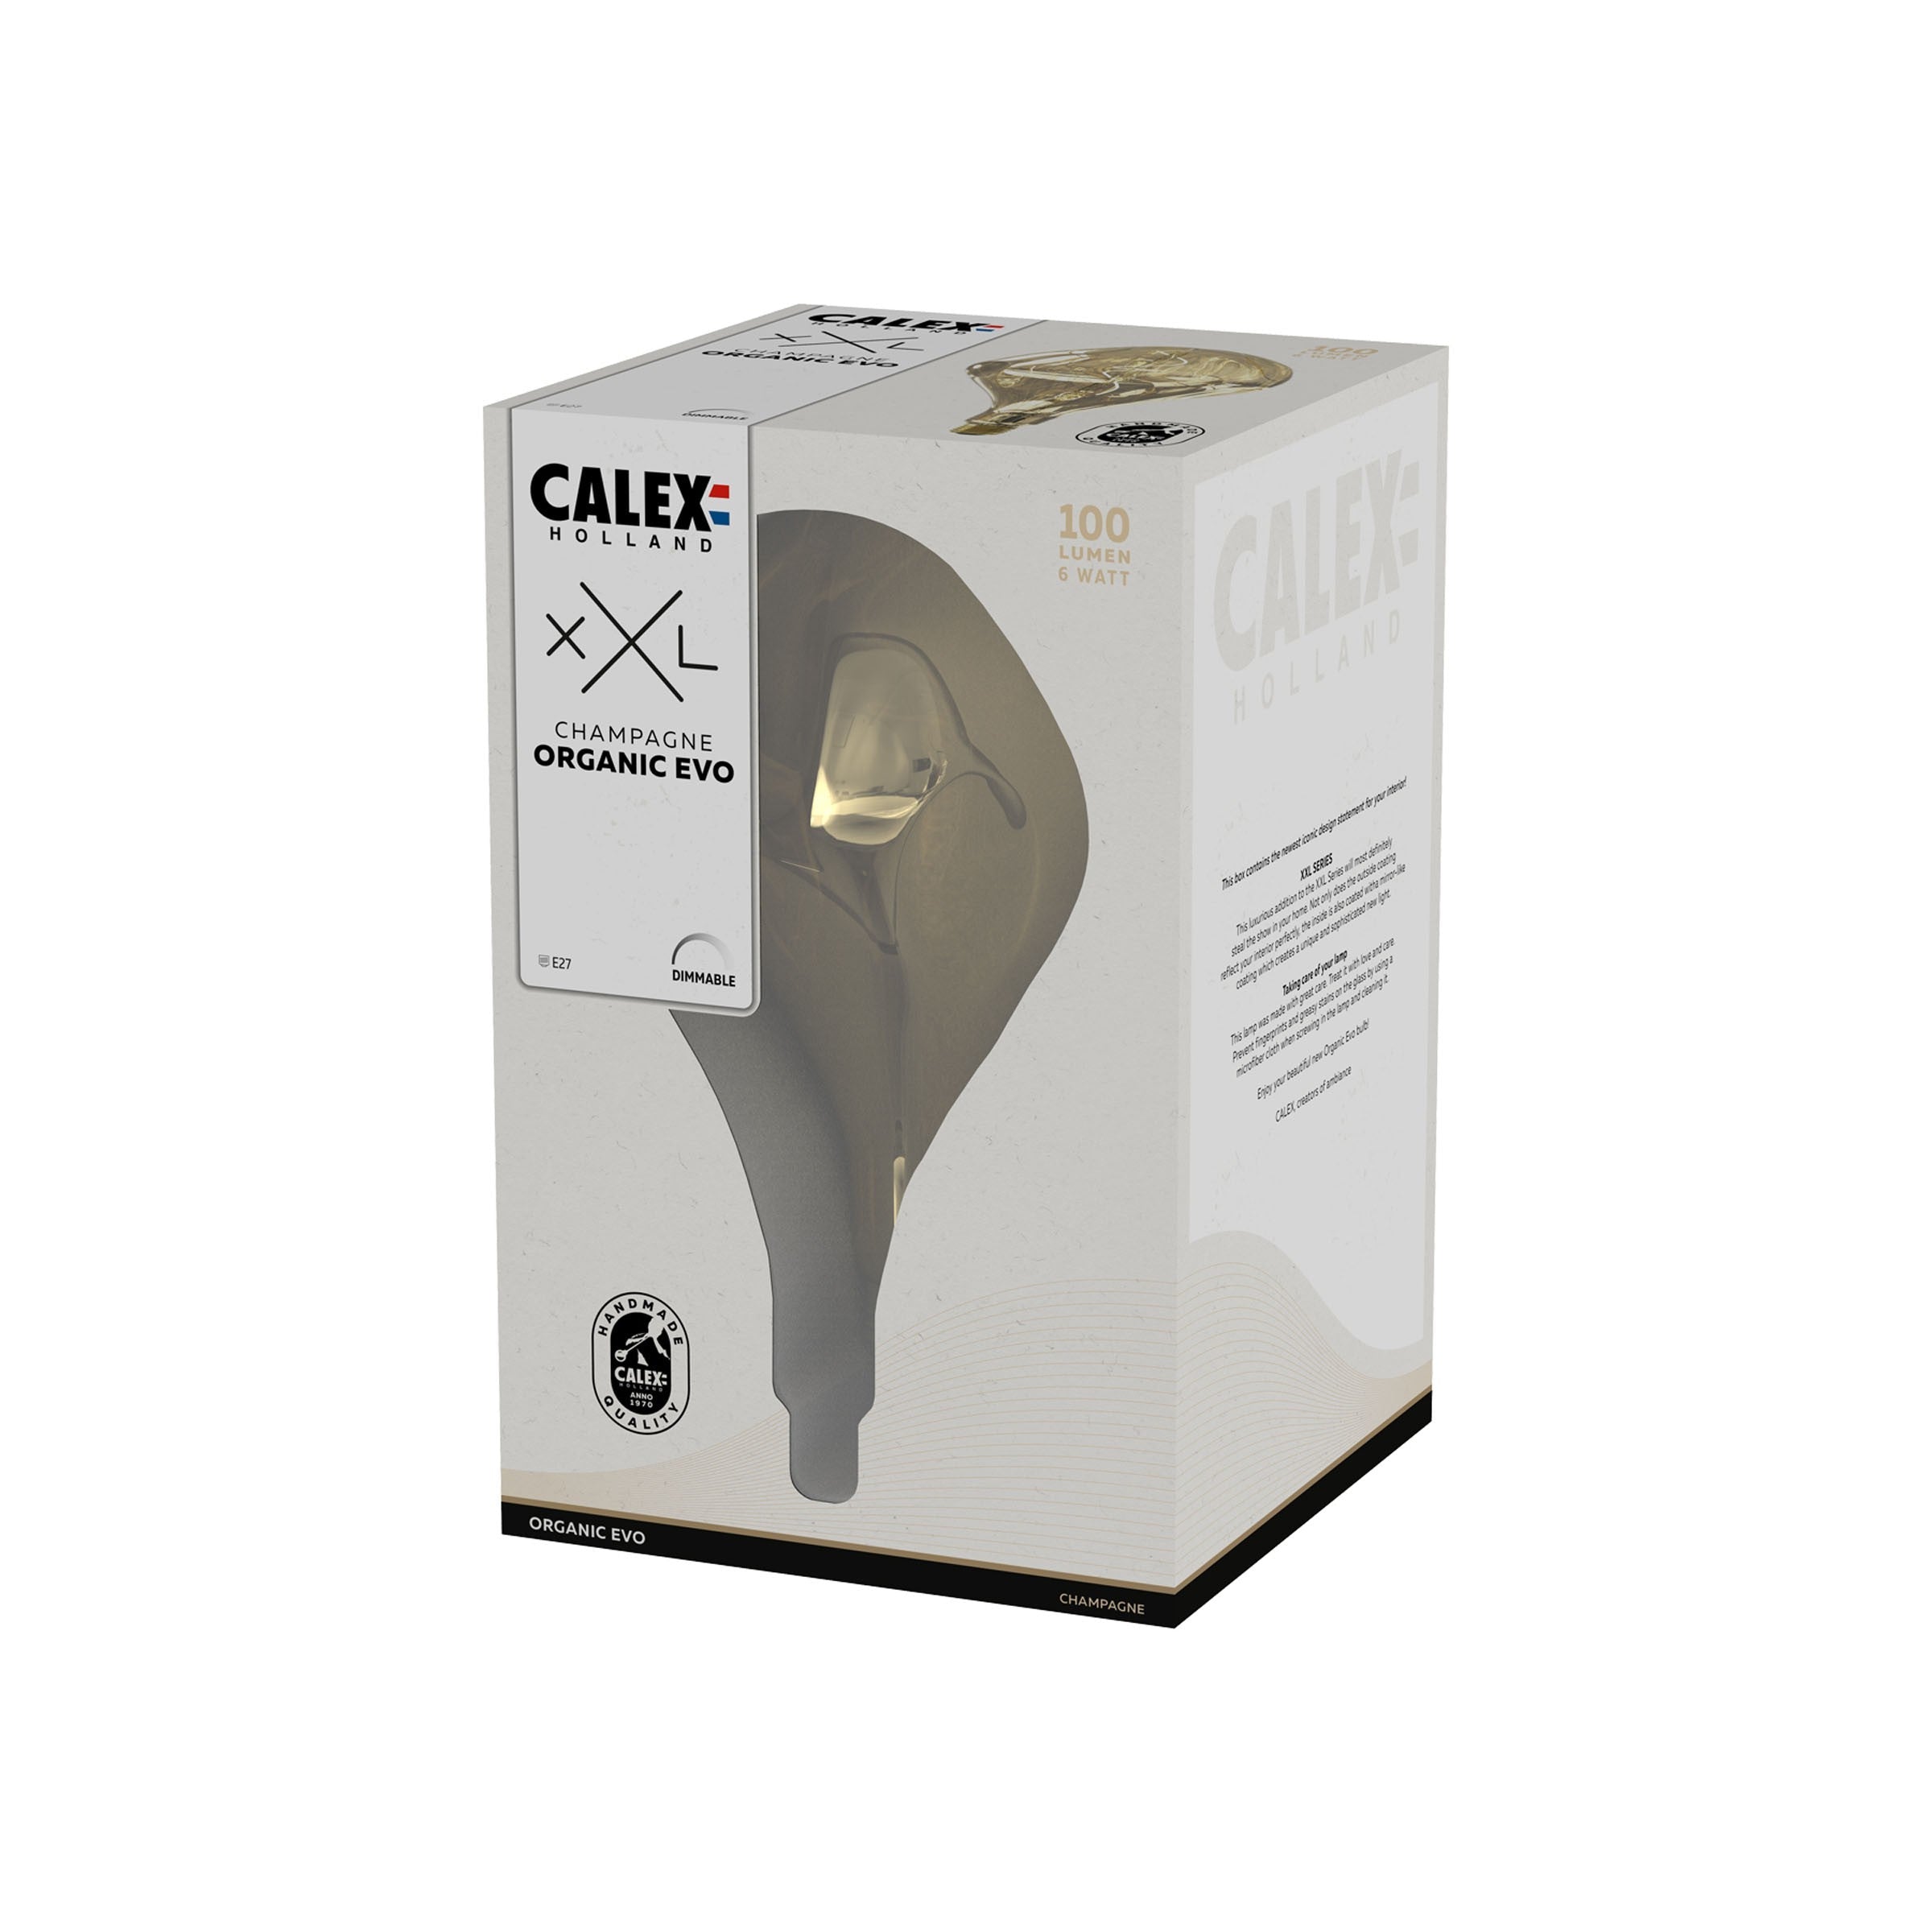 Calex XXL Champagne Organic Evo Warm White LED Light Bulb